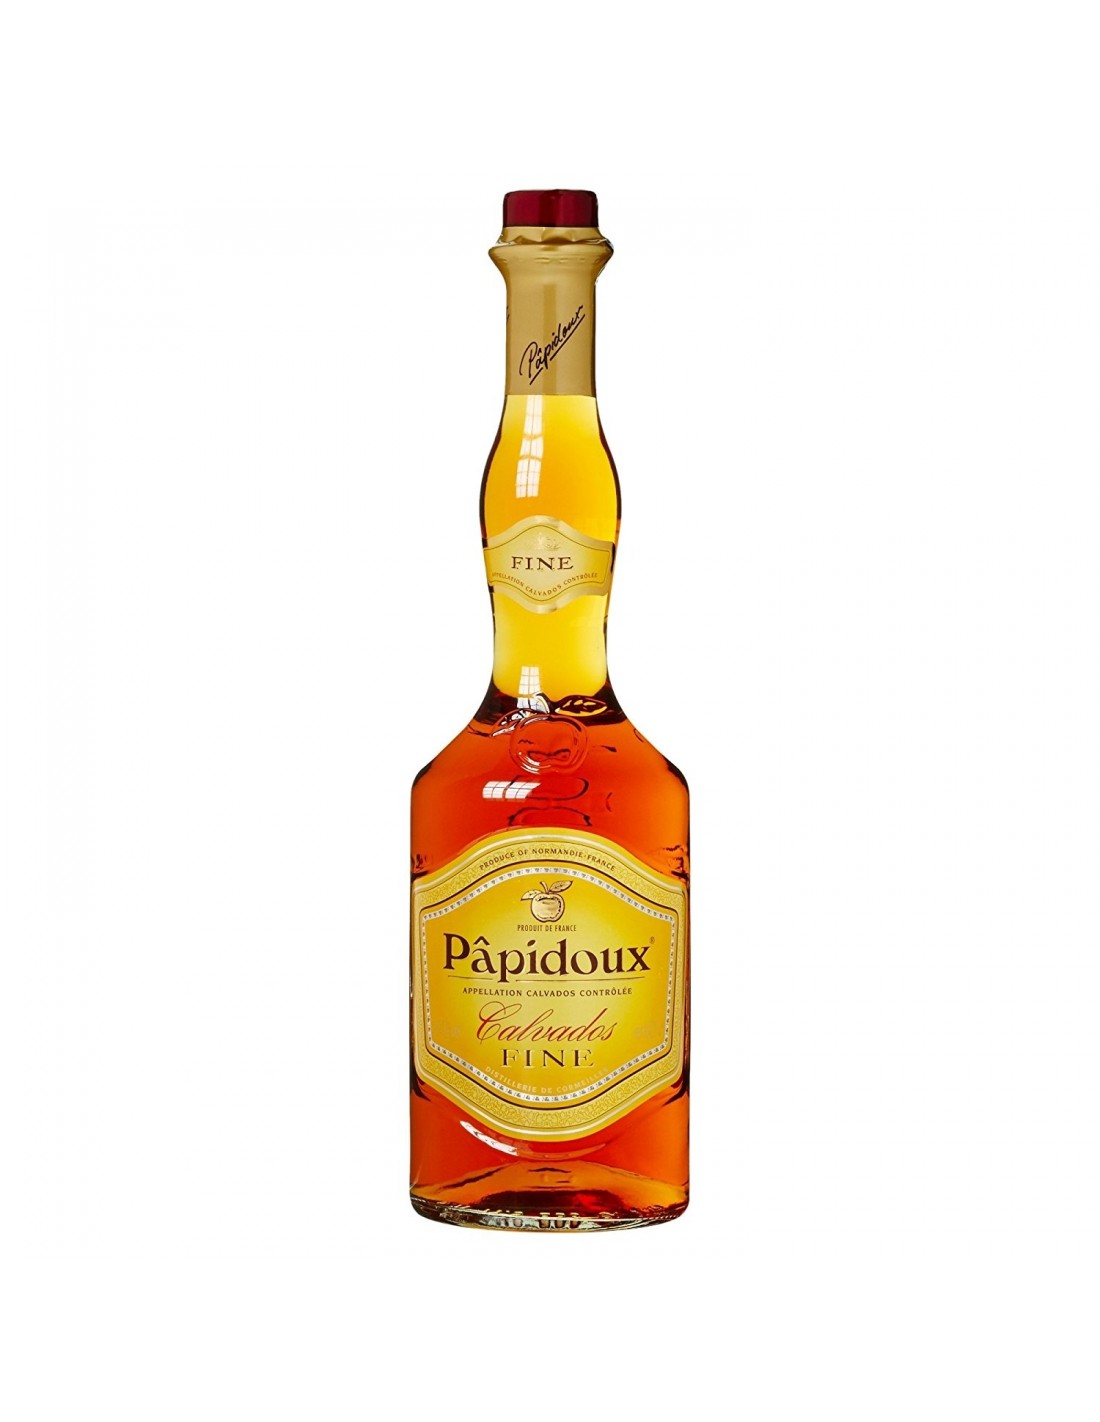 Brandy Calvados Papidoux Fine, 40% alc., 0.7L, Franta alcooldiscount.ro